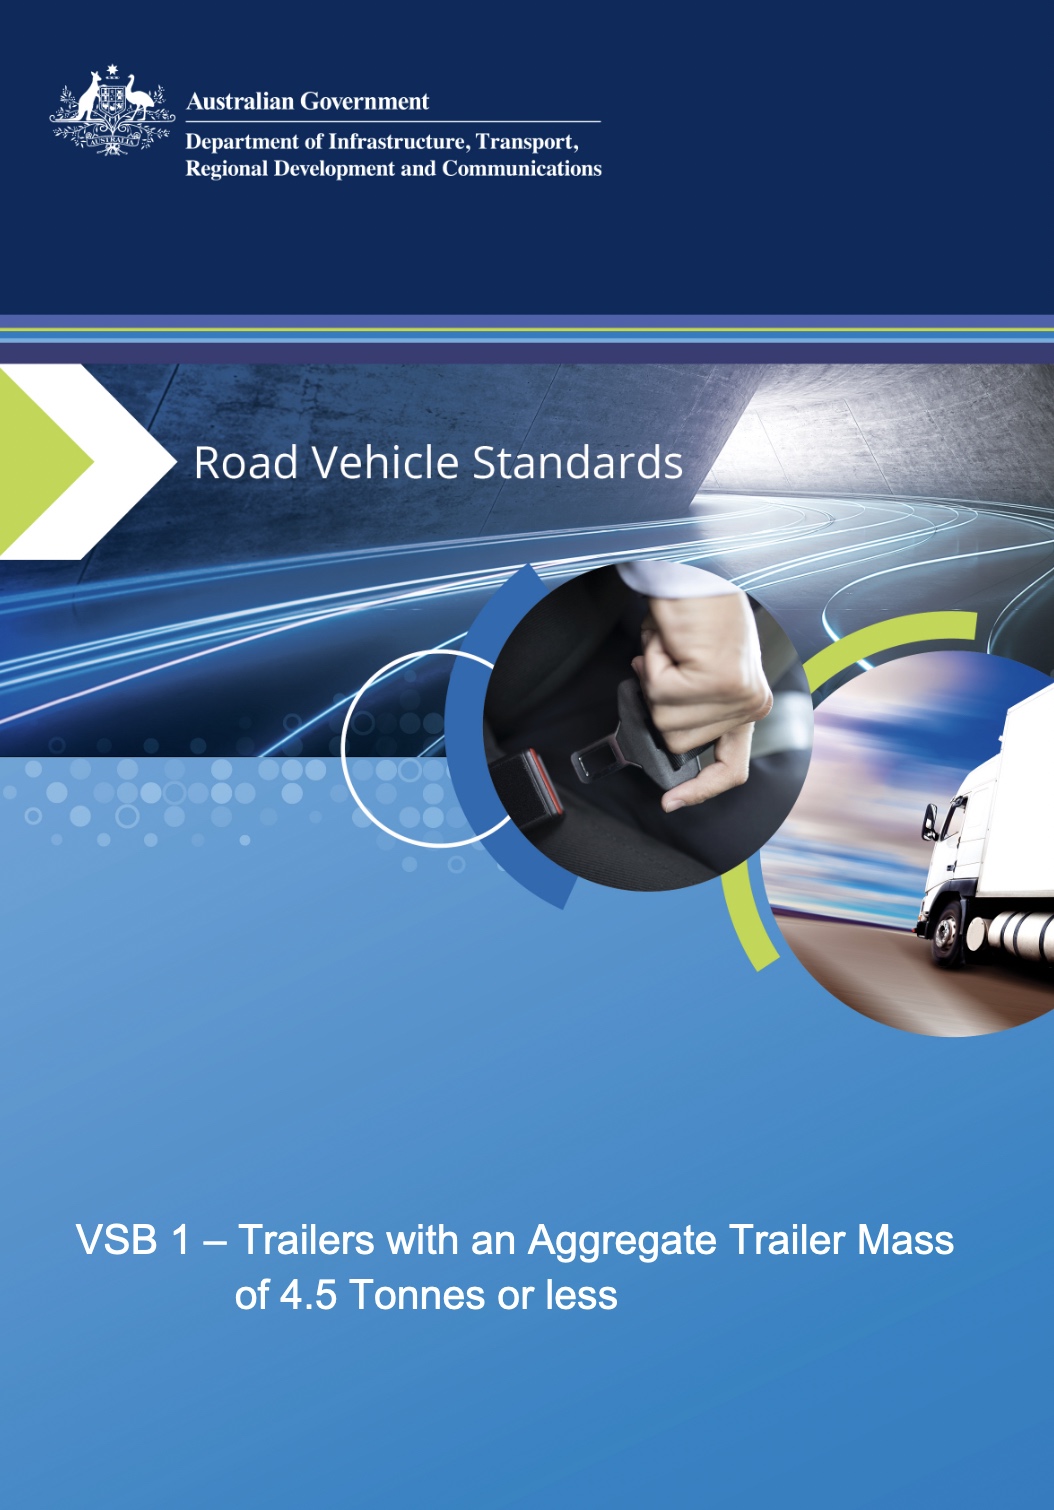 VSB1 (Vehicle Standard Bulletin 1) Version 6 takes effect July 1st 2023.